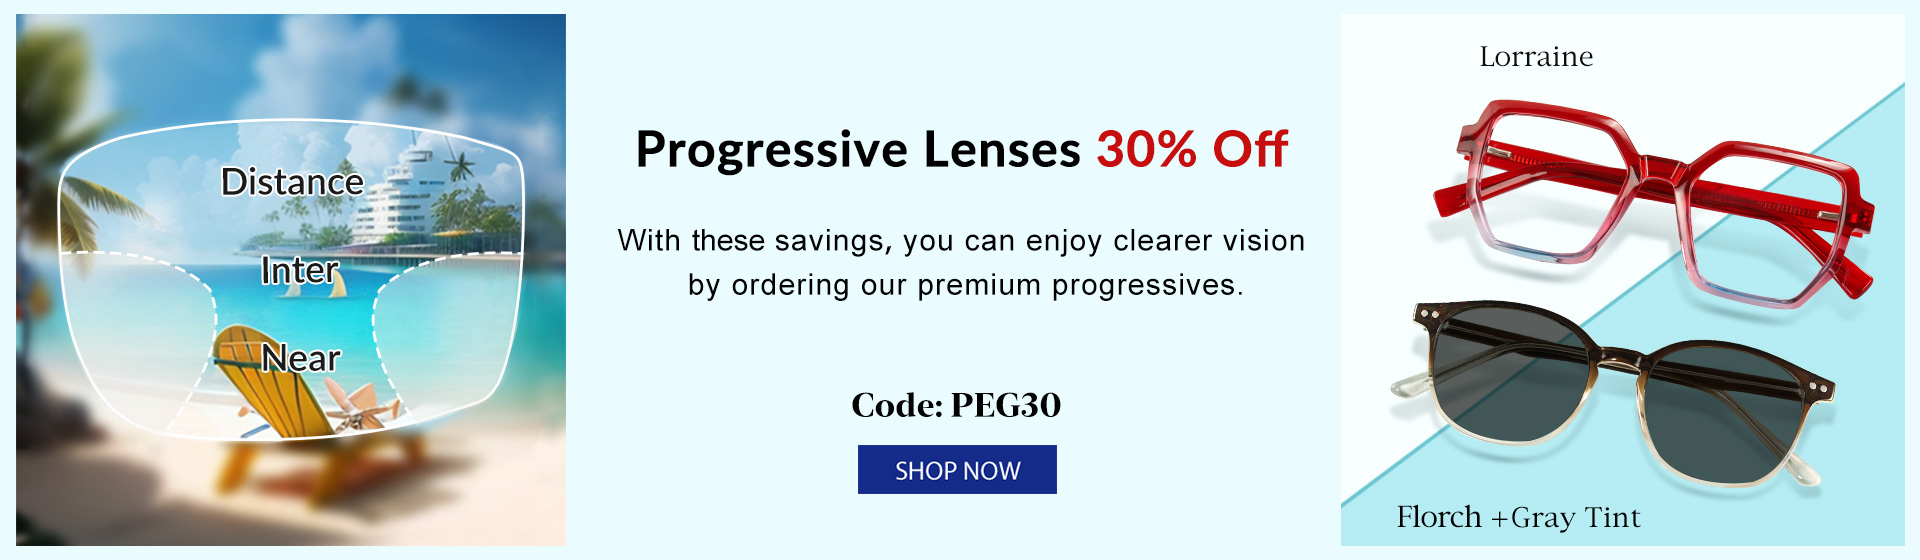 Progressive Lenses 30% Off